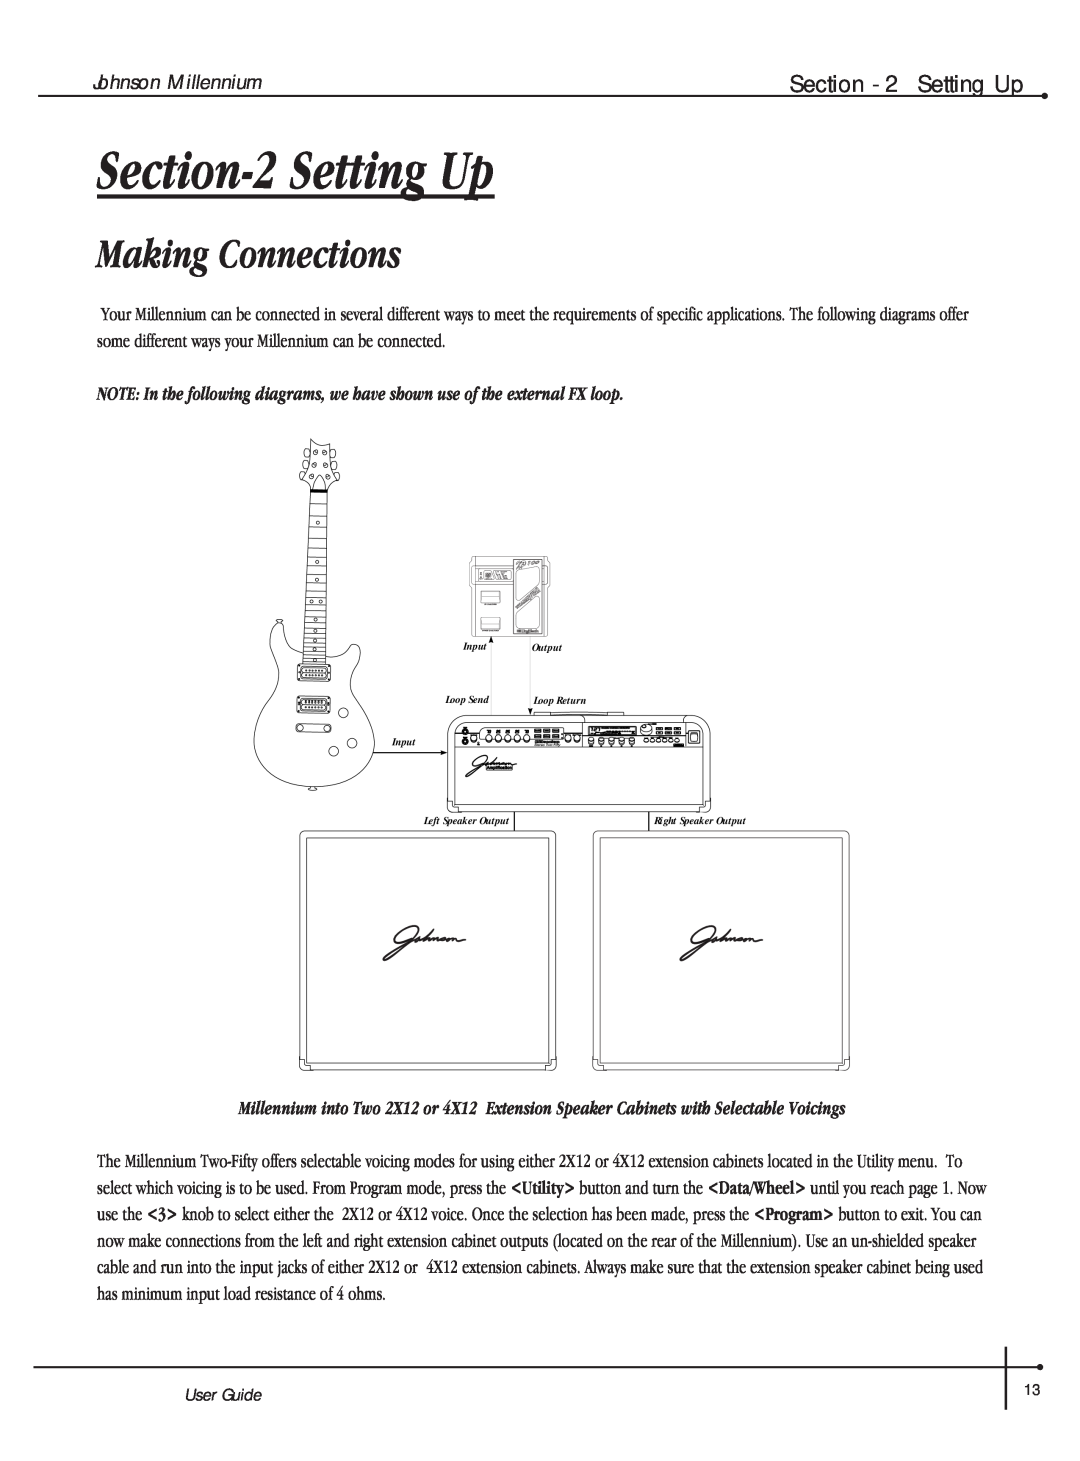 Millennium Enterprises Integrated Modeling Amplifier manual Setting Up, Making Connections, User Guide, Johnson Millennium 